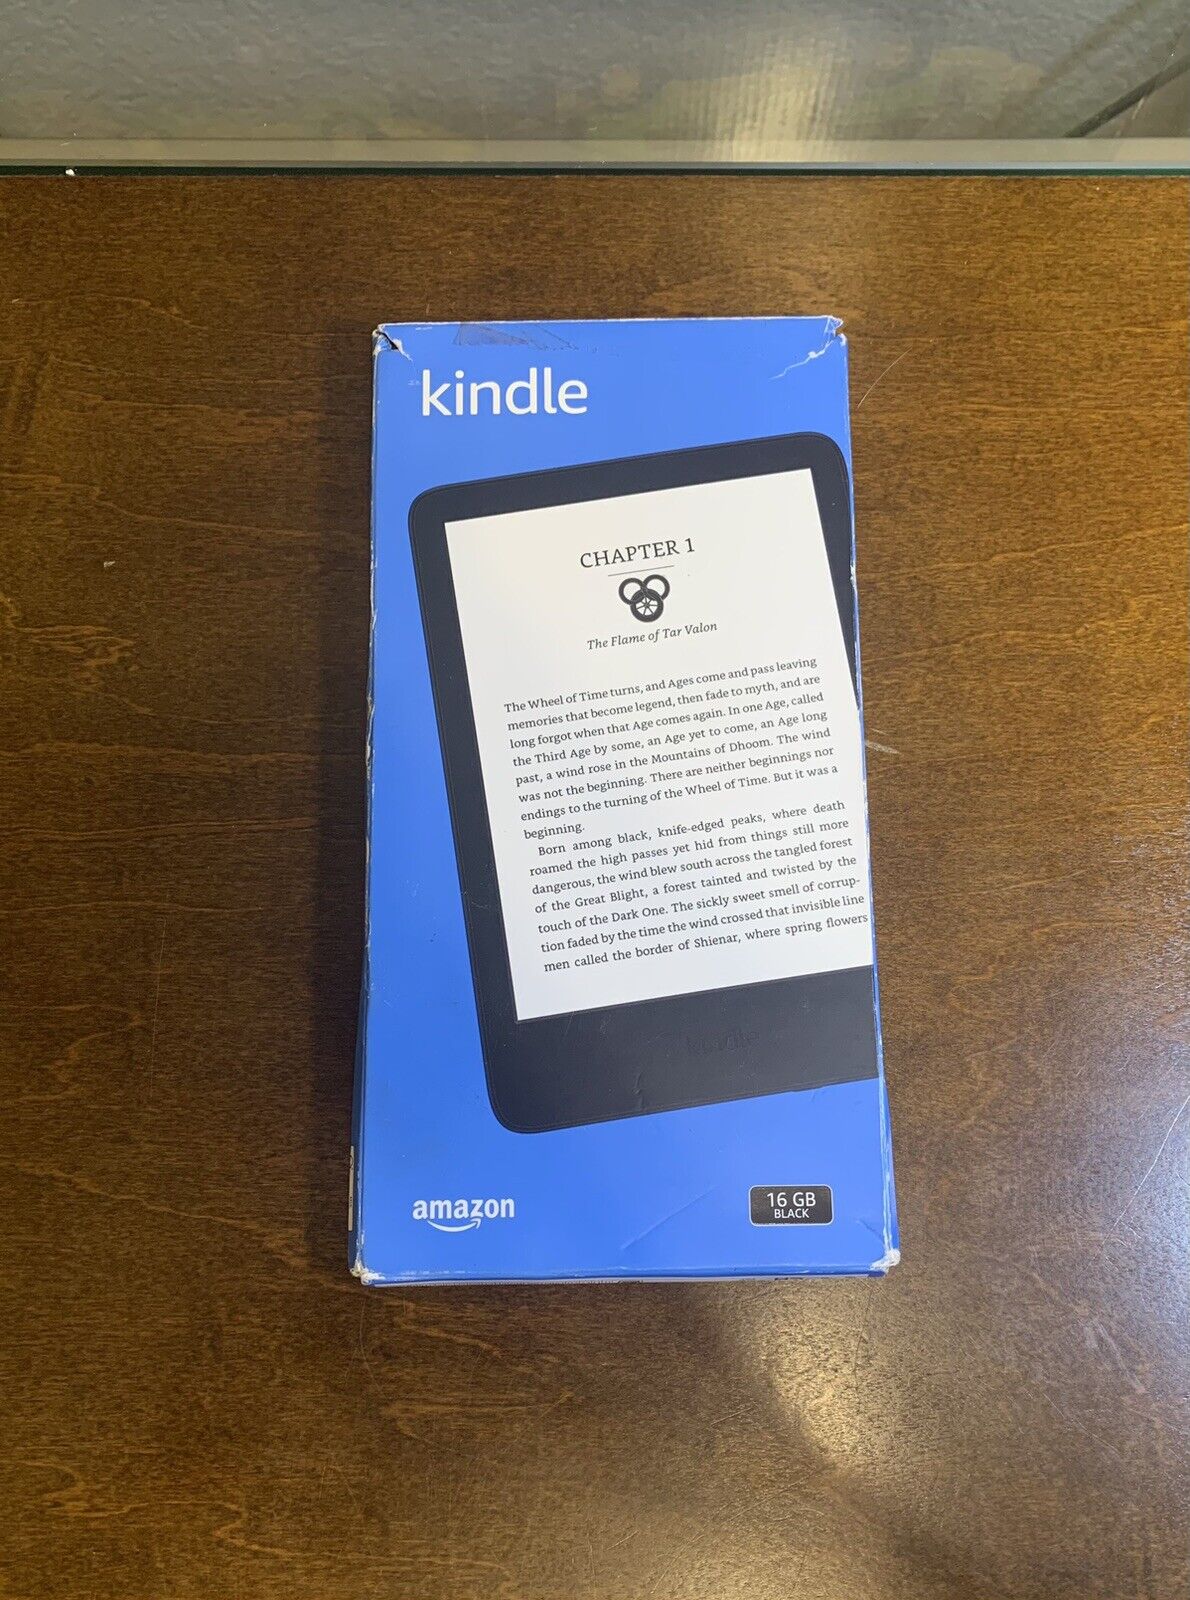 Amazon Kindle 11th Generation Black 6 Inch Display 16GB eBook Reader -OB New